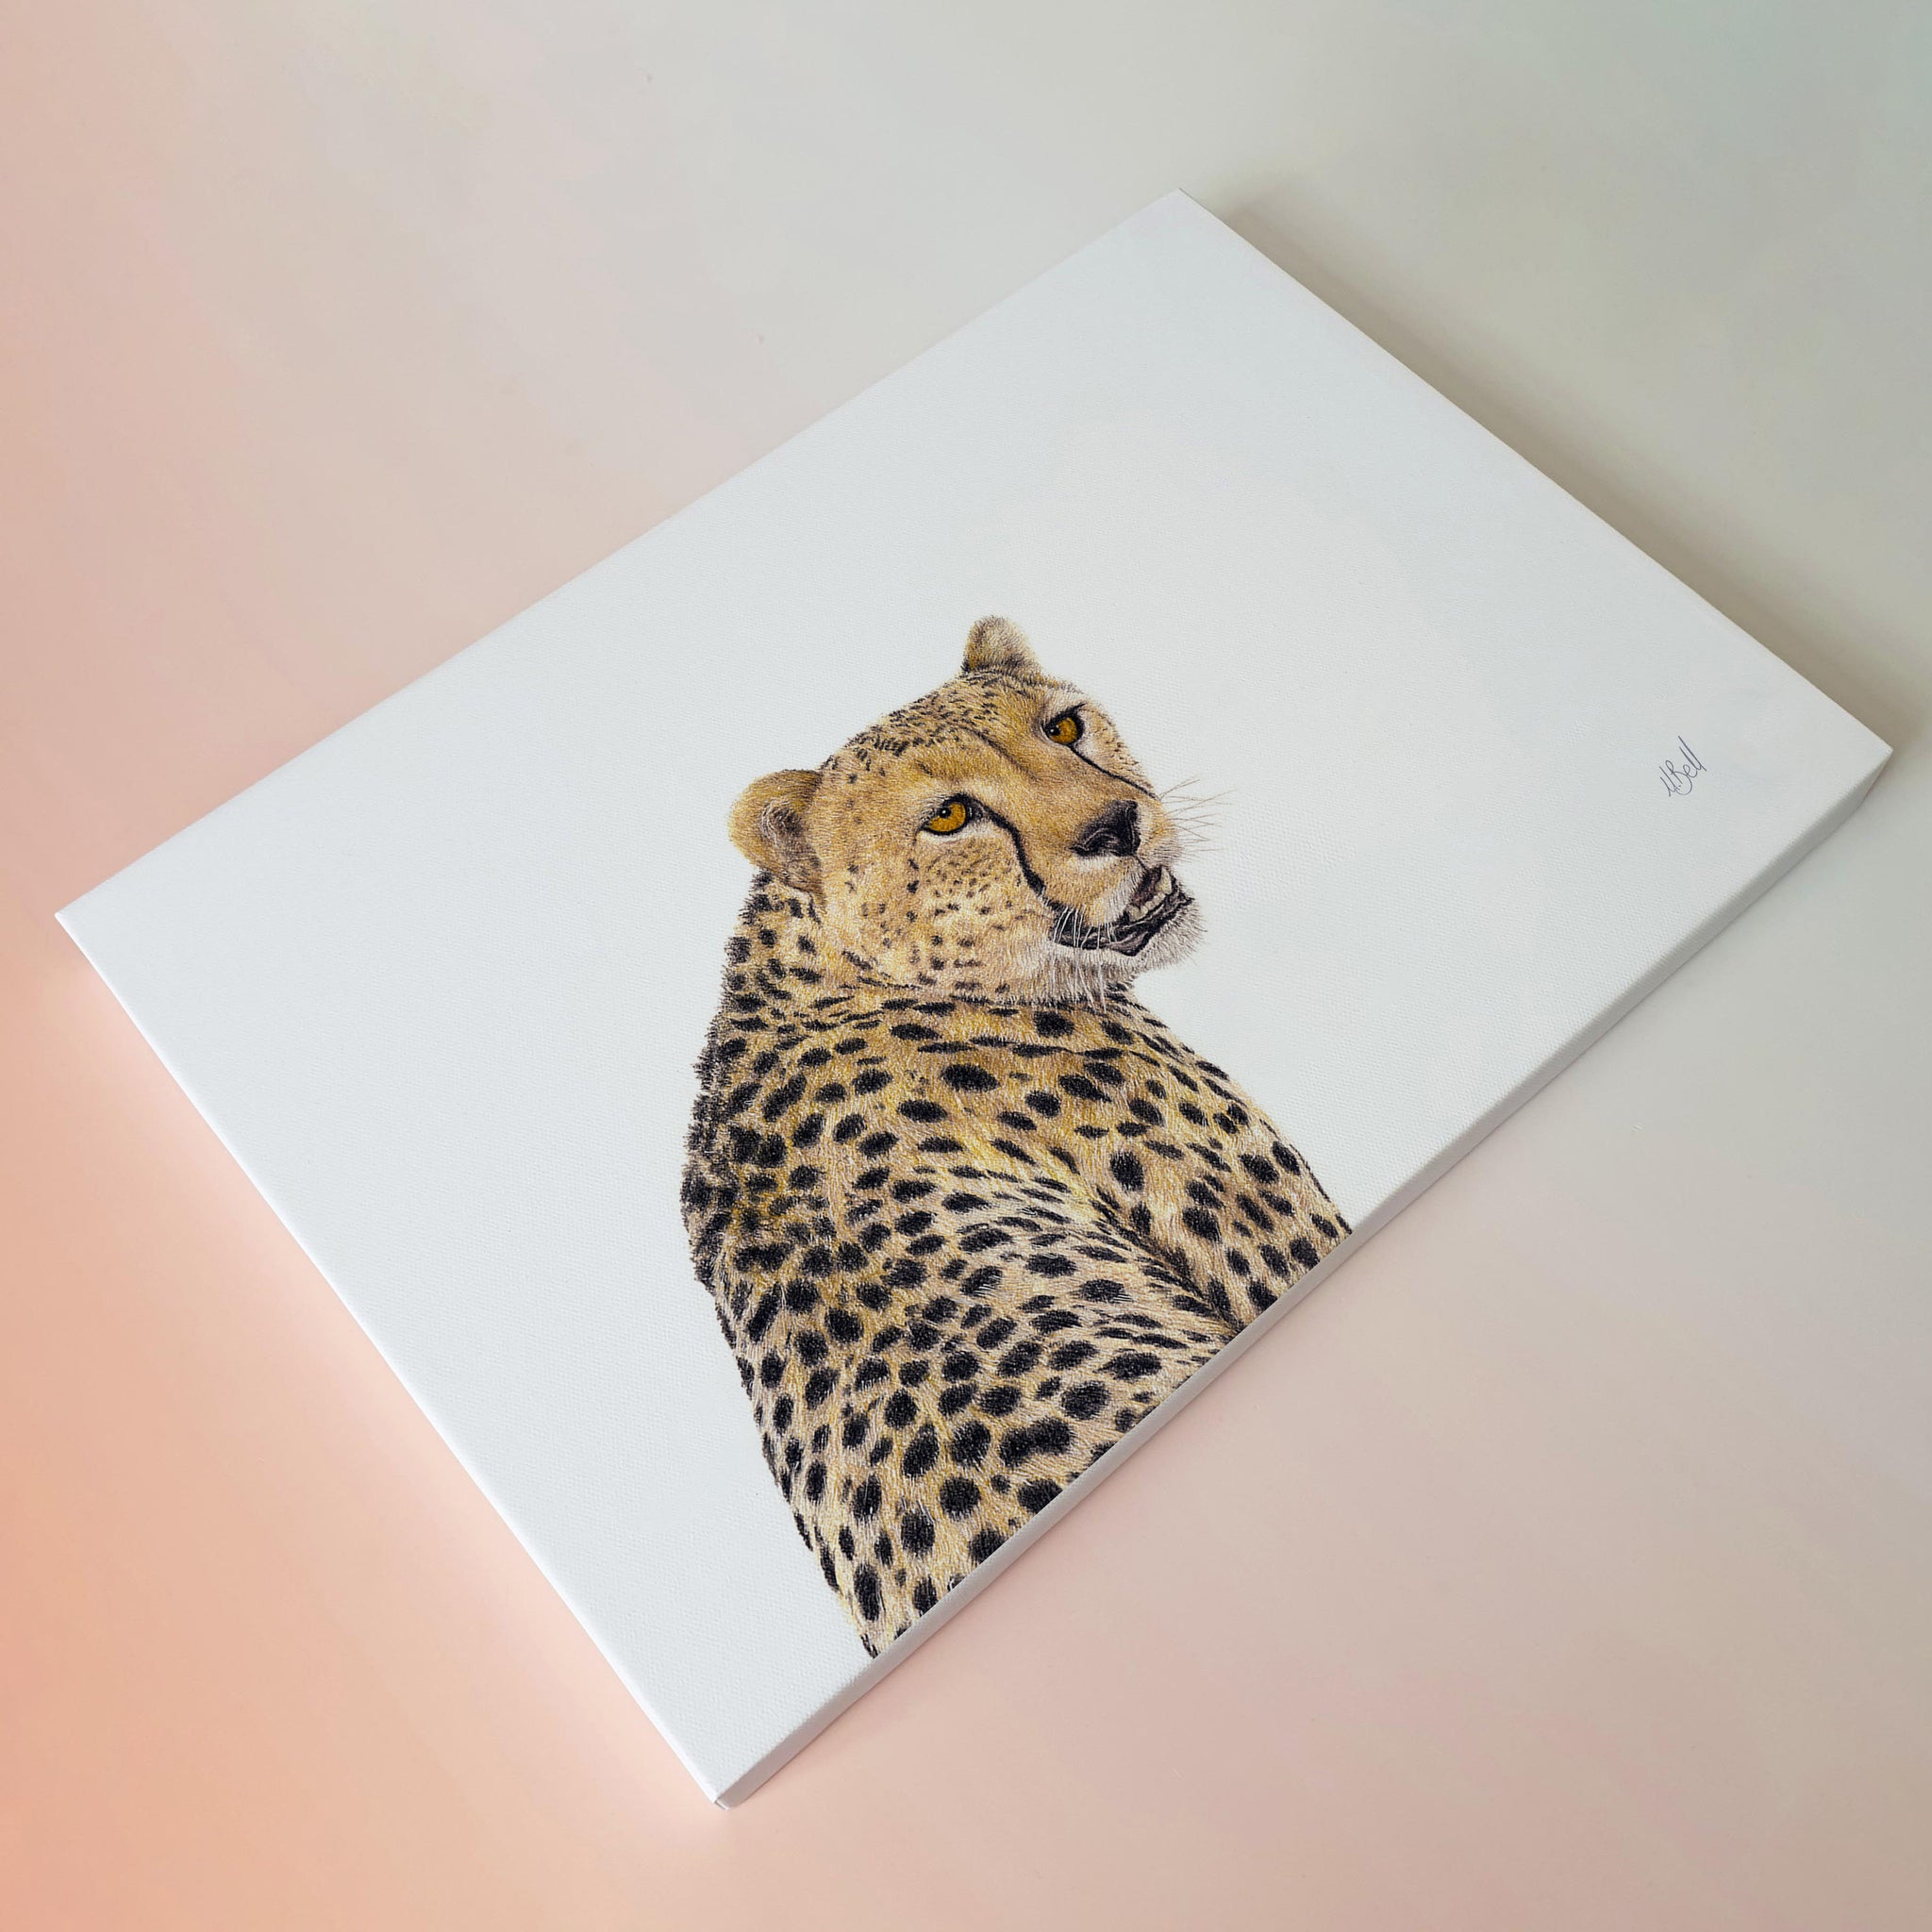 Cheetah in the Kalahari pencil artwork on canvas by Matthew Bell